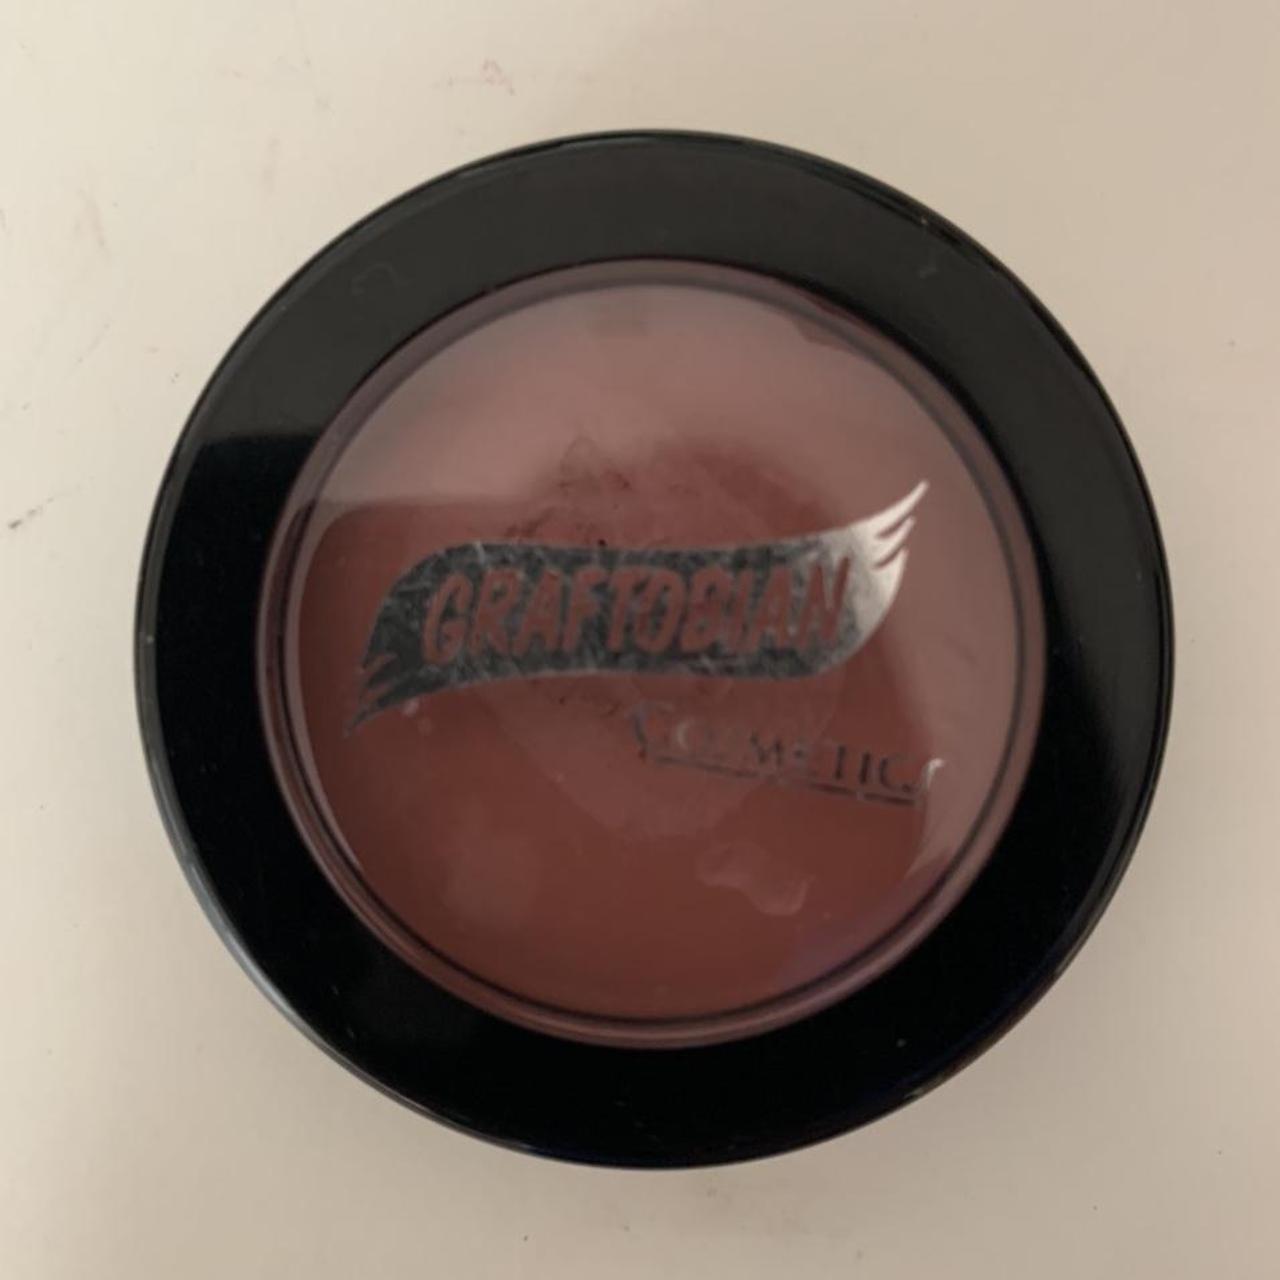 Product Image 1 - Graftobian cream blush in dusty